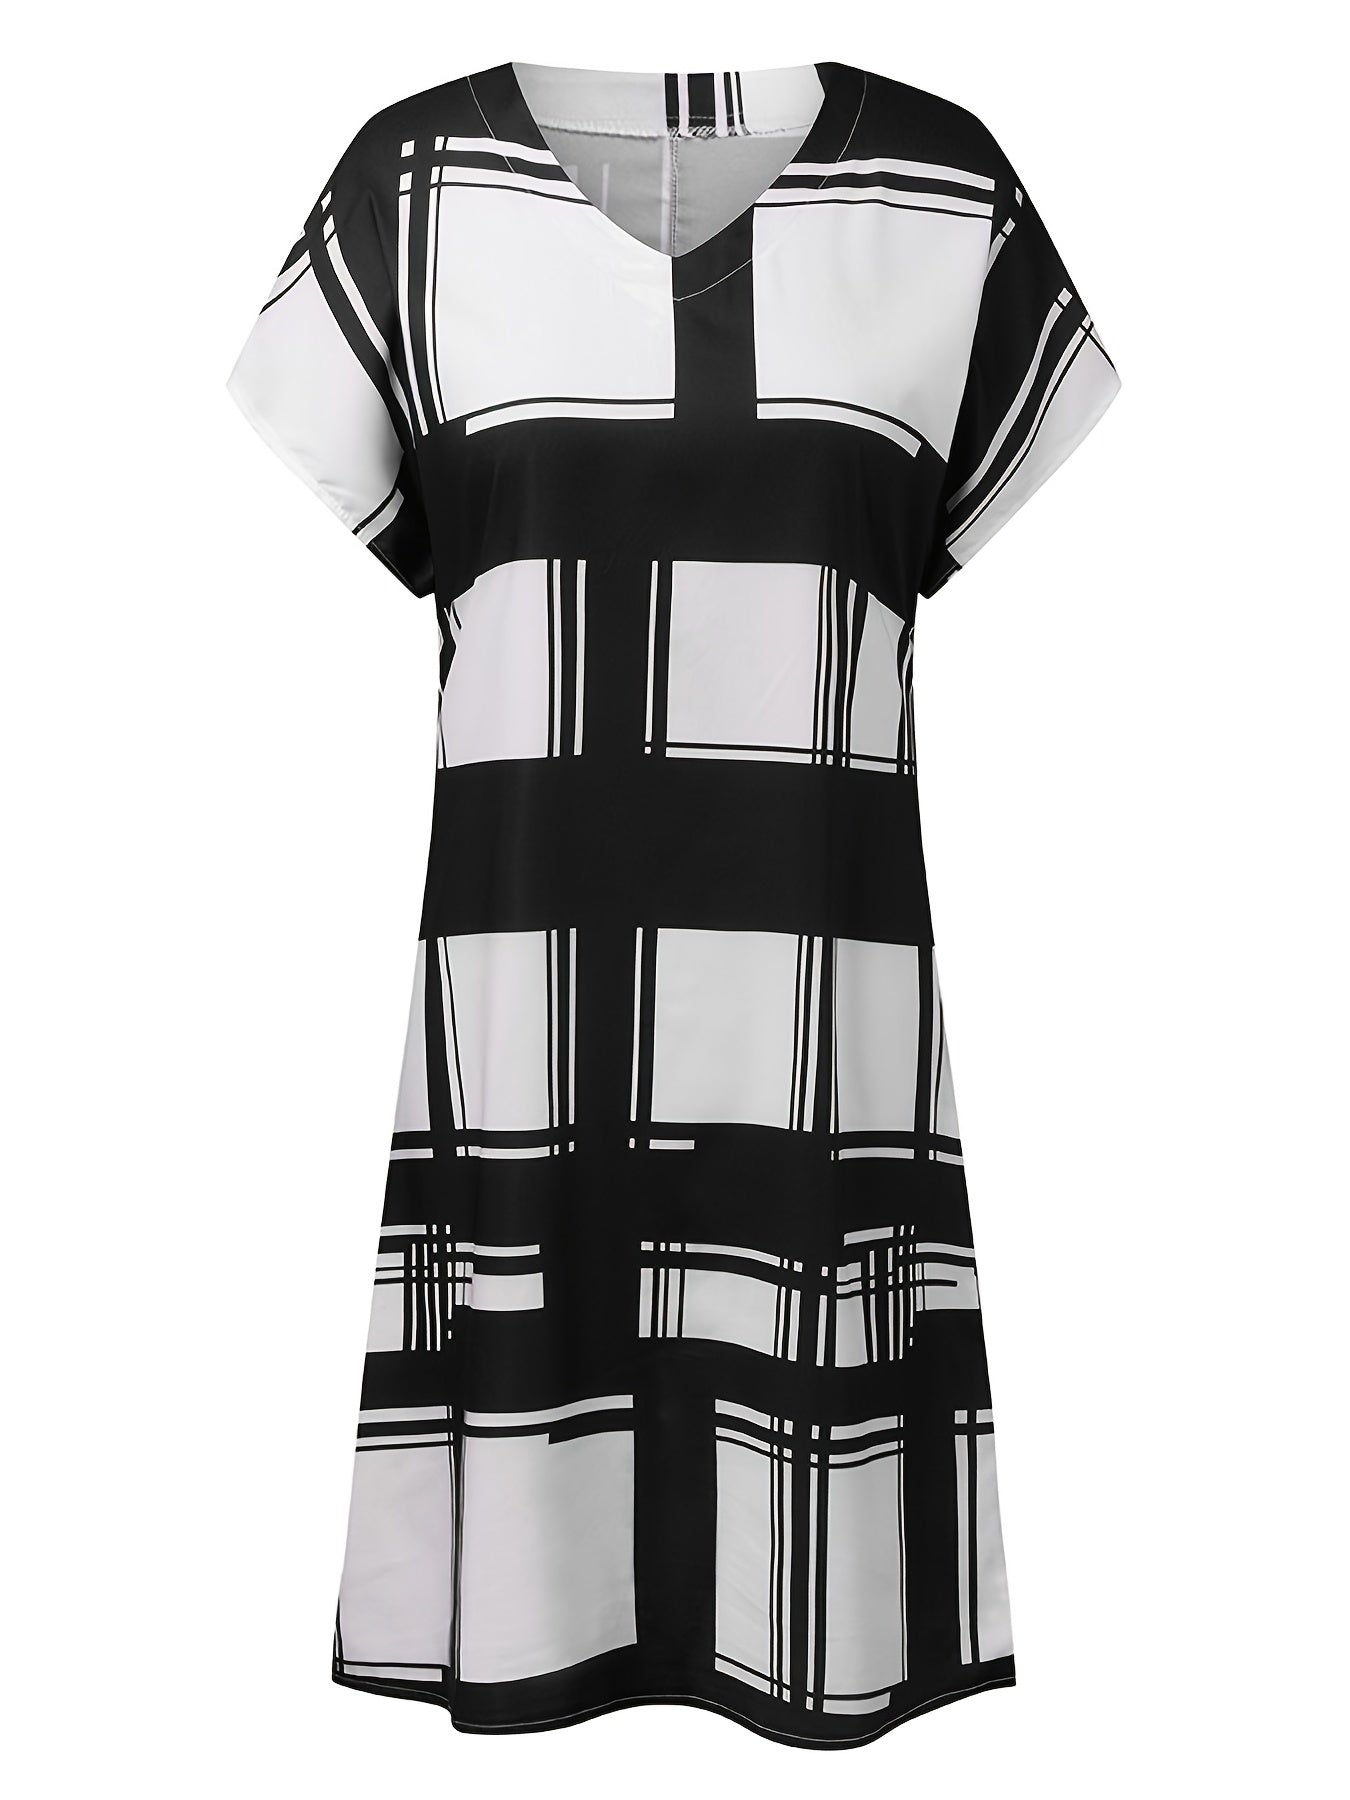 「lovevop」Casual Geometric Print Dress, Short Sleeve V-neck Loose Fashion Summer Dresses, Women's Clothing